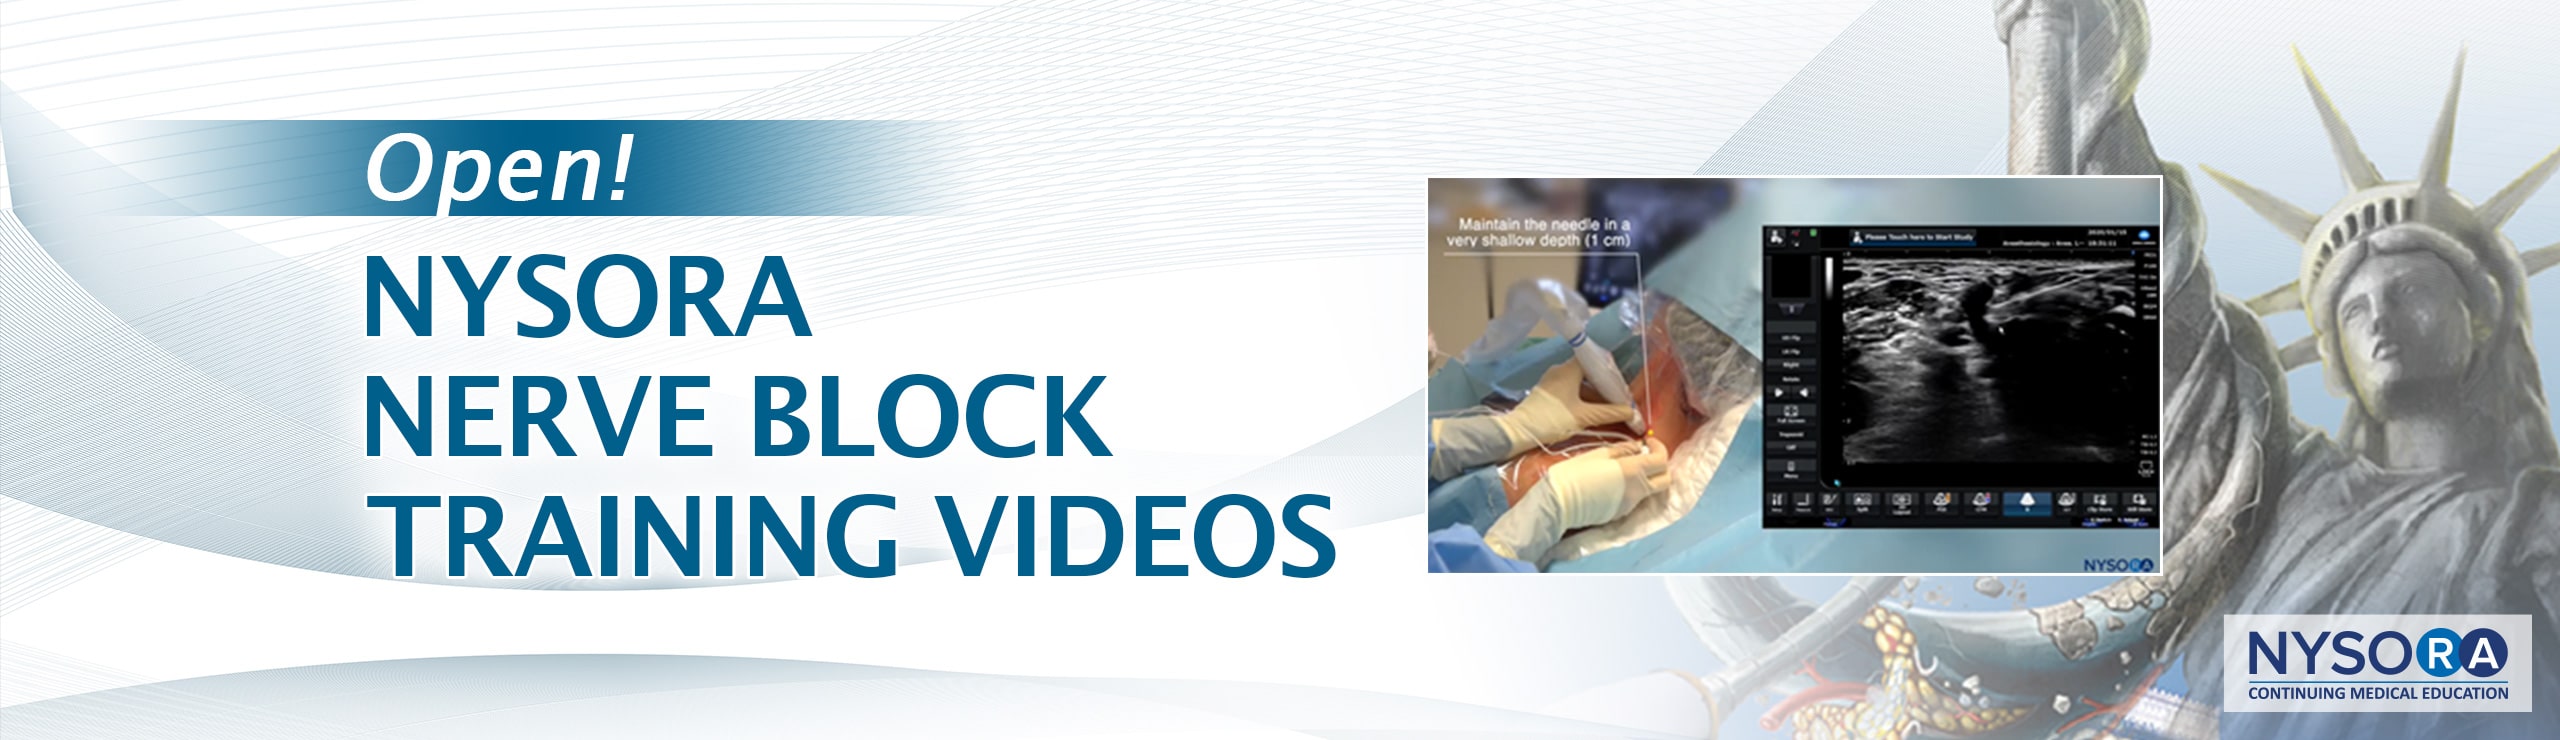 Ultrasound-guided nerve block